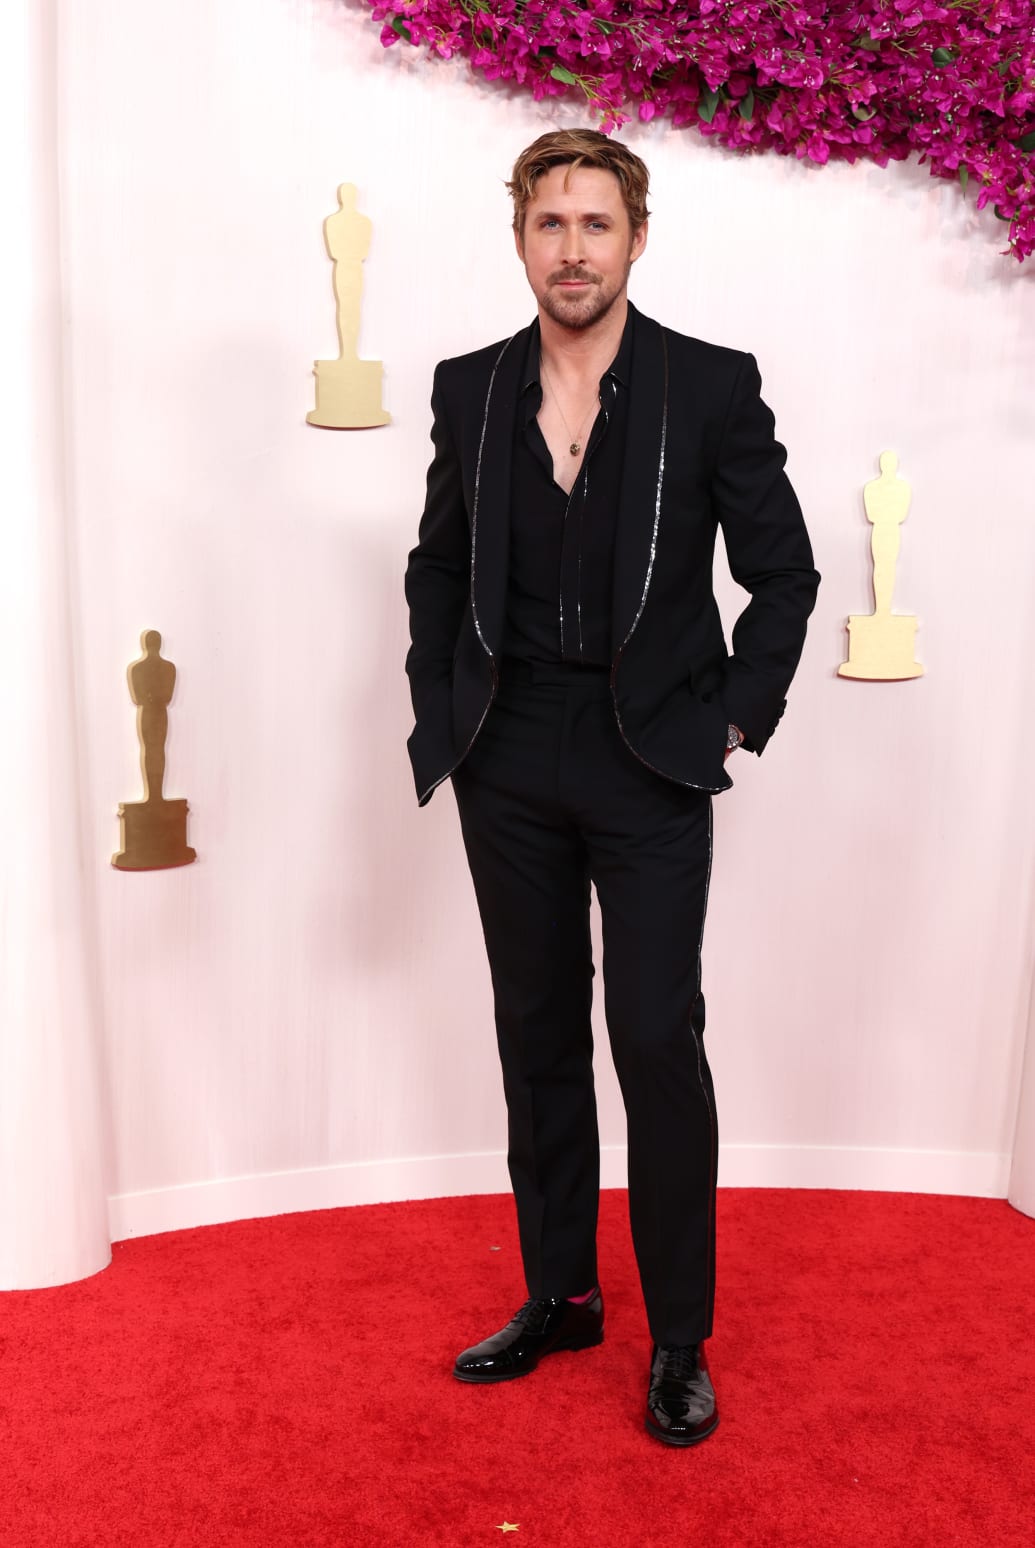 Ryan Gosling at the Oscars 